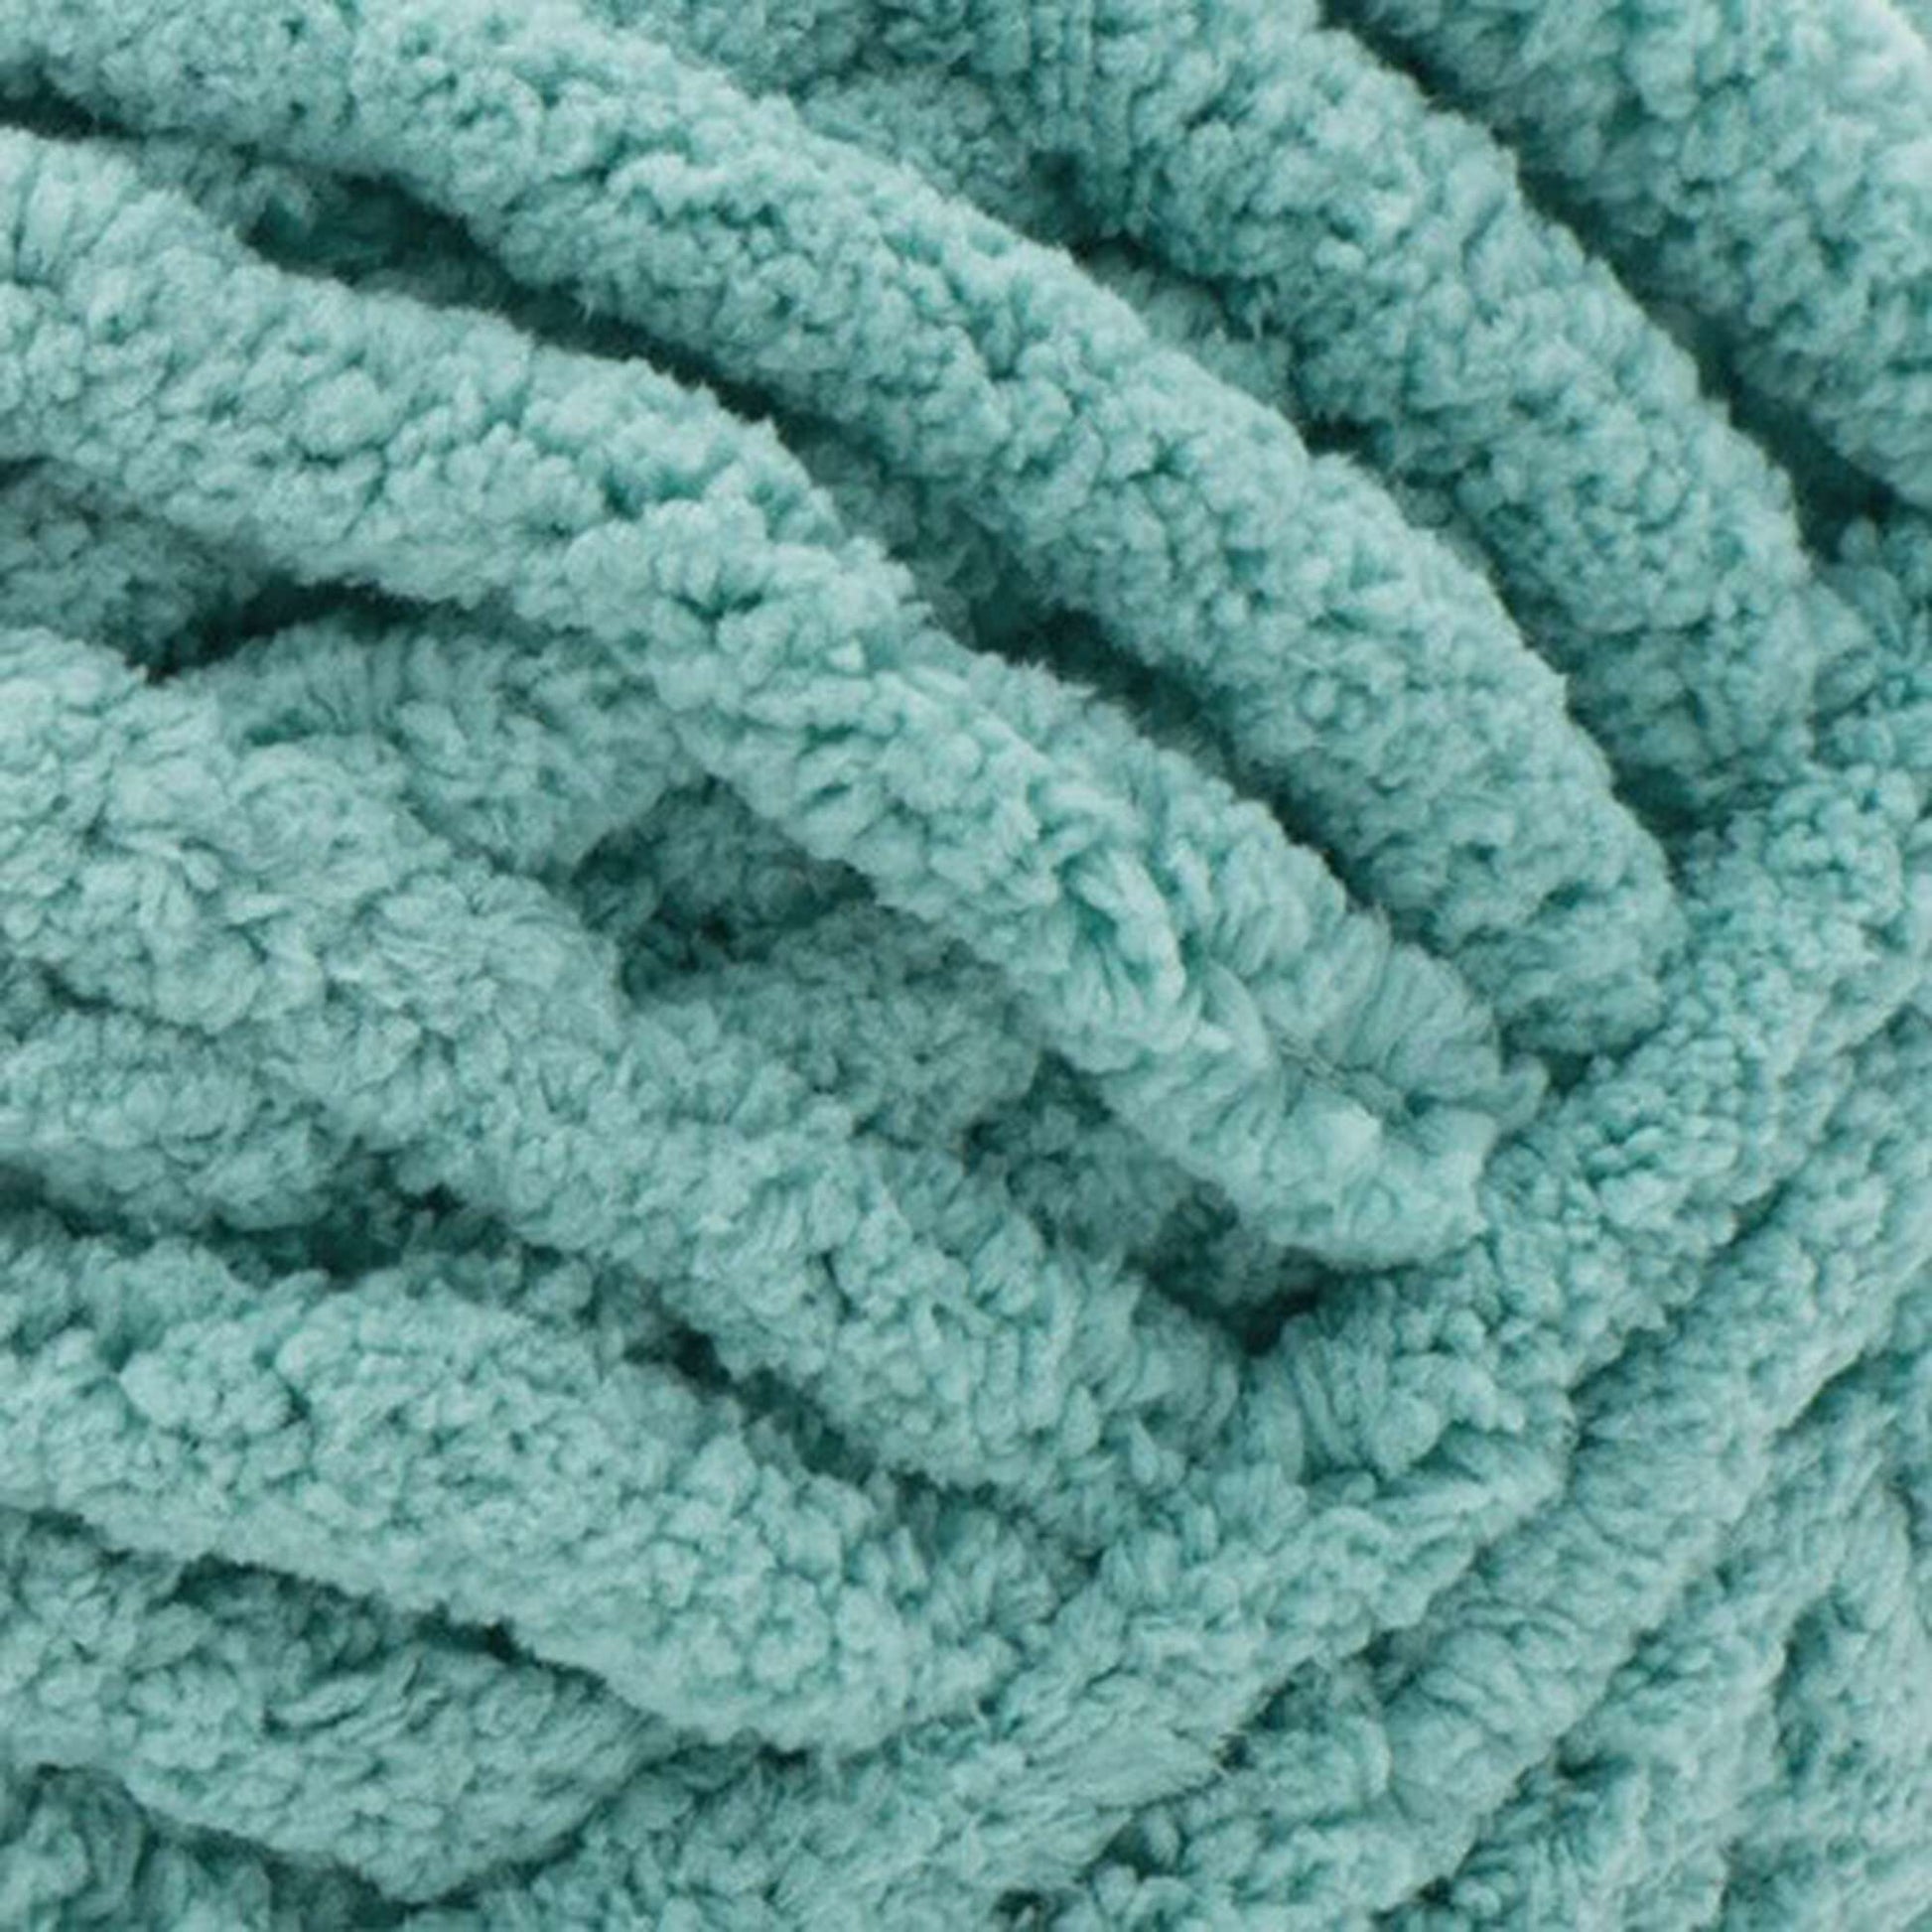 Bernat Blanket Extra Yarn (300g/10.5oz)